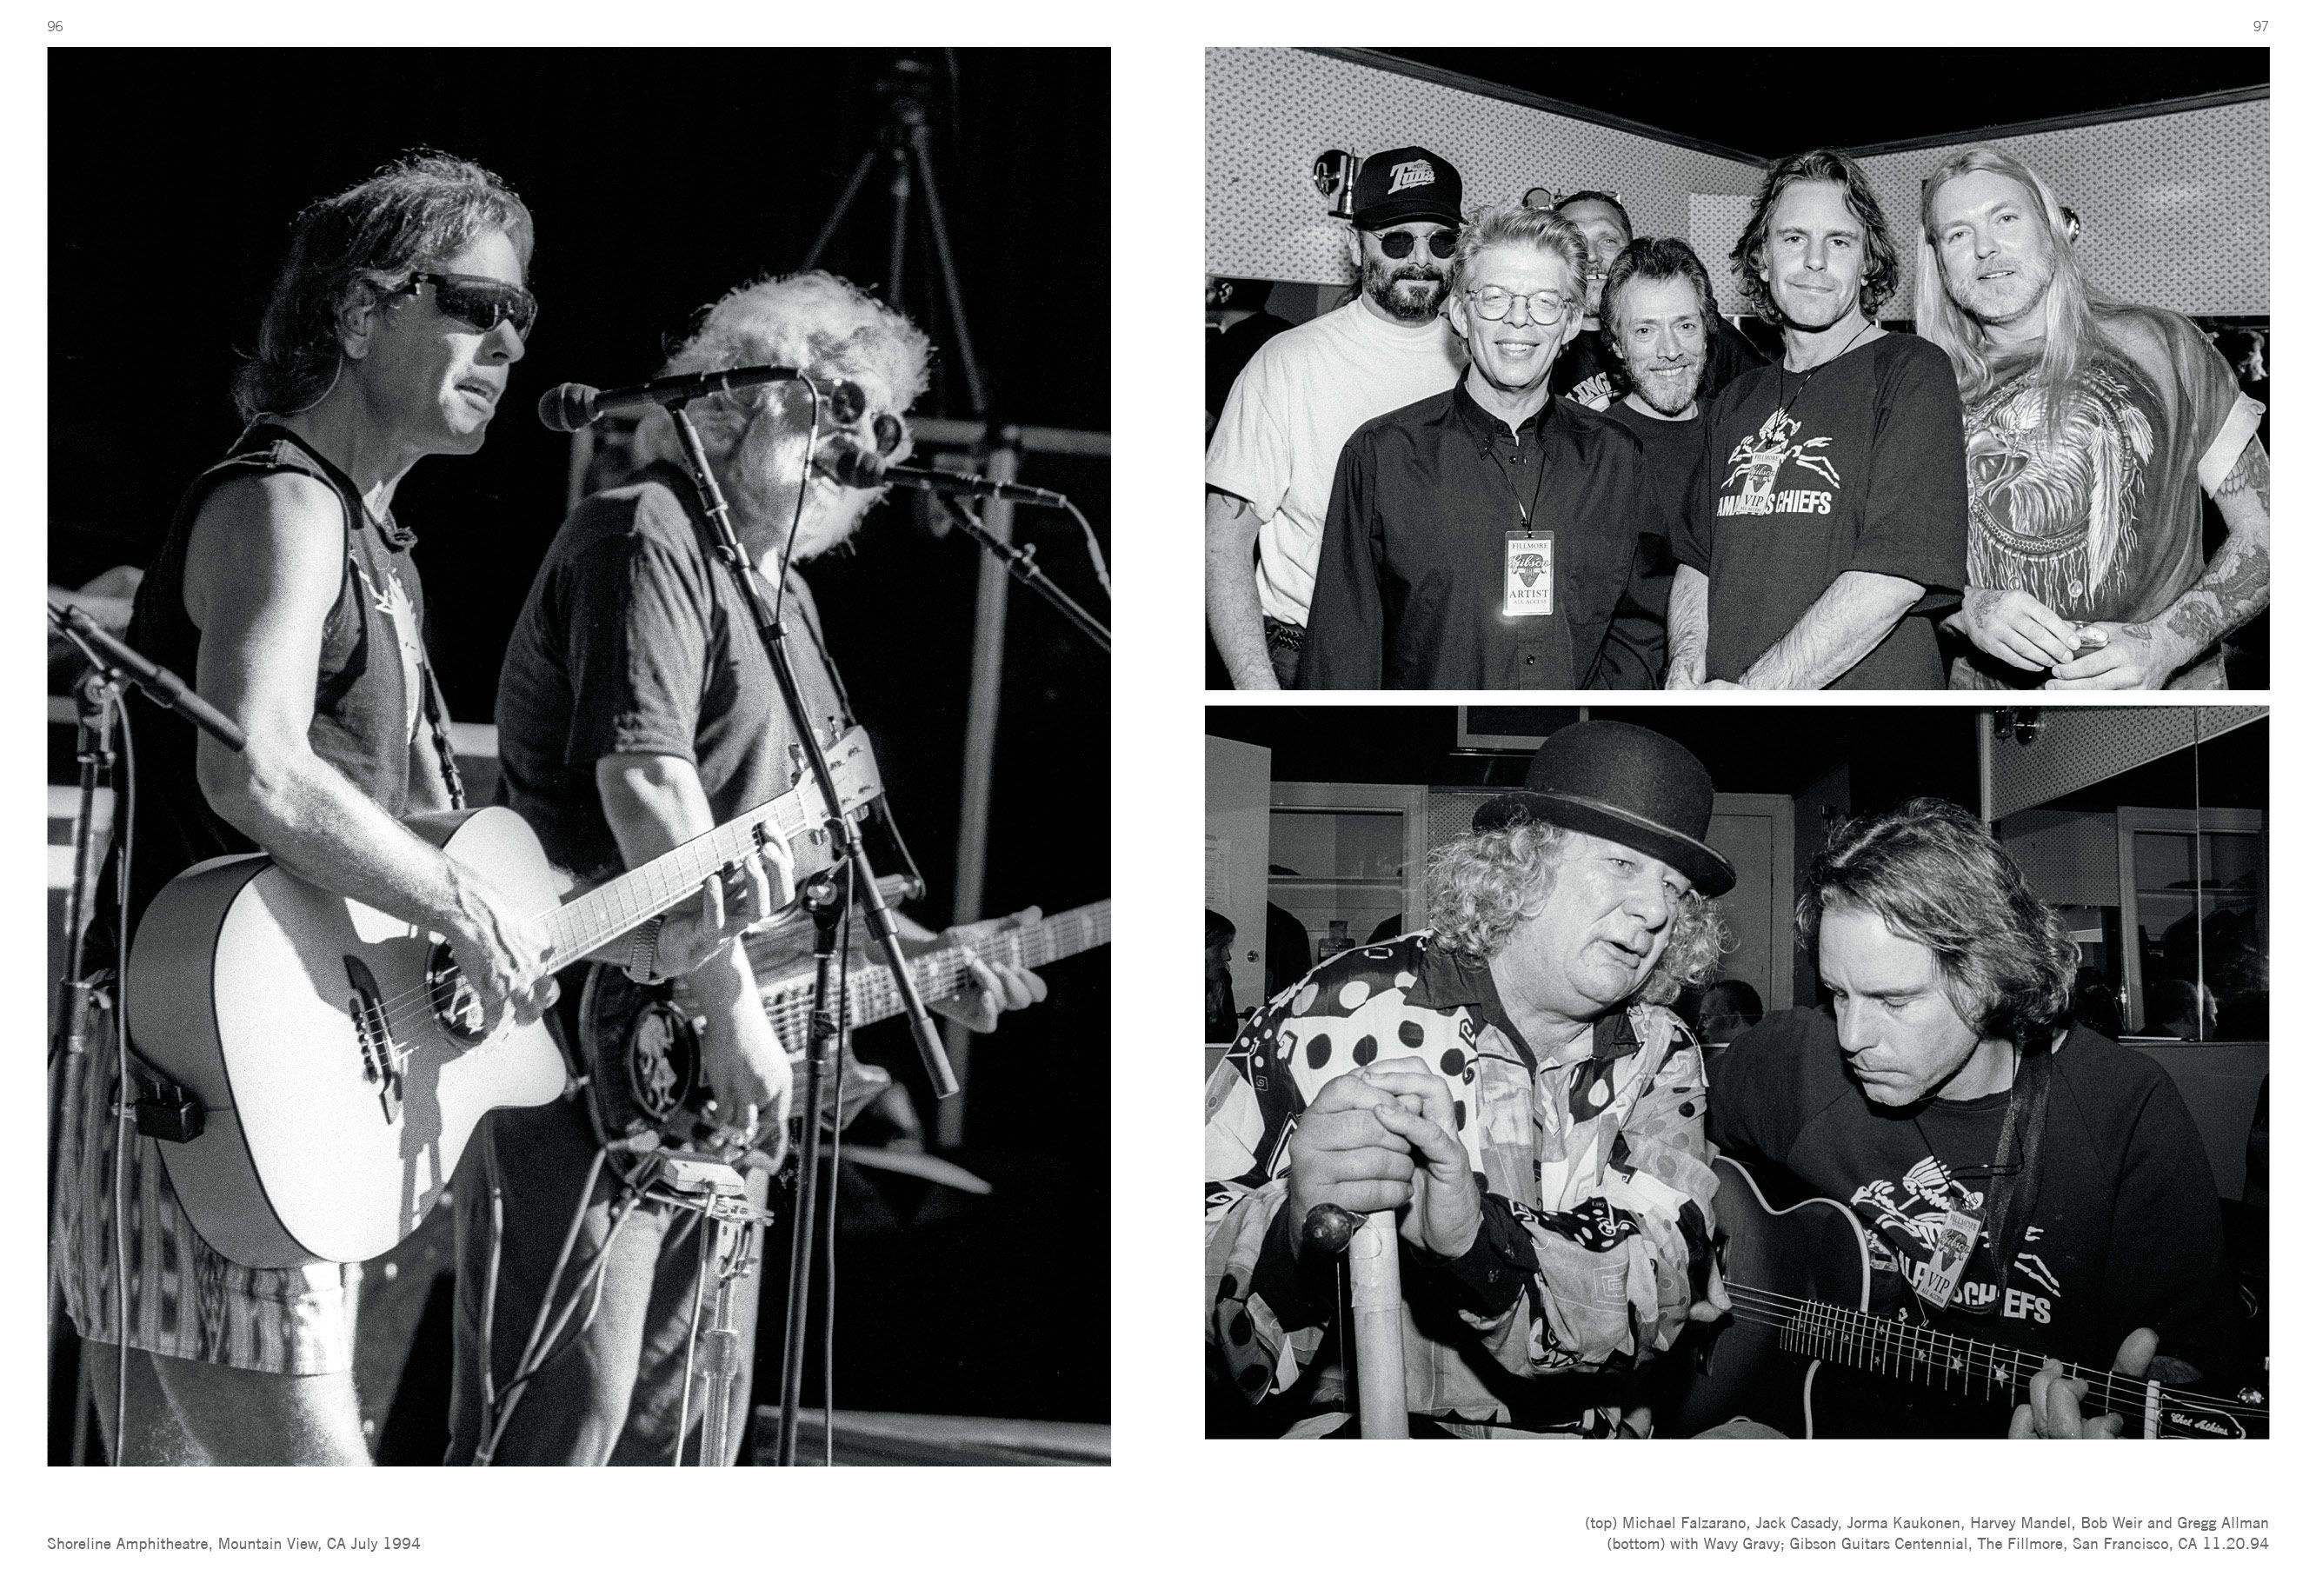 Grateful Dead, July 1994, Mountain View, Calif., and Gibson Guitars Centennial, November 1994, San Francisco